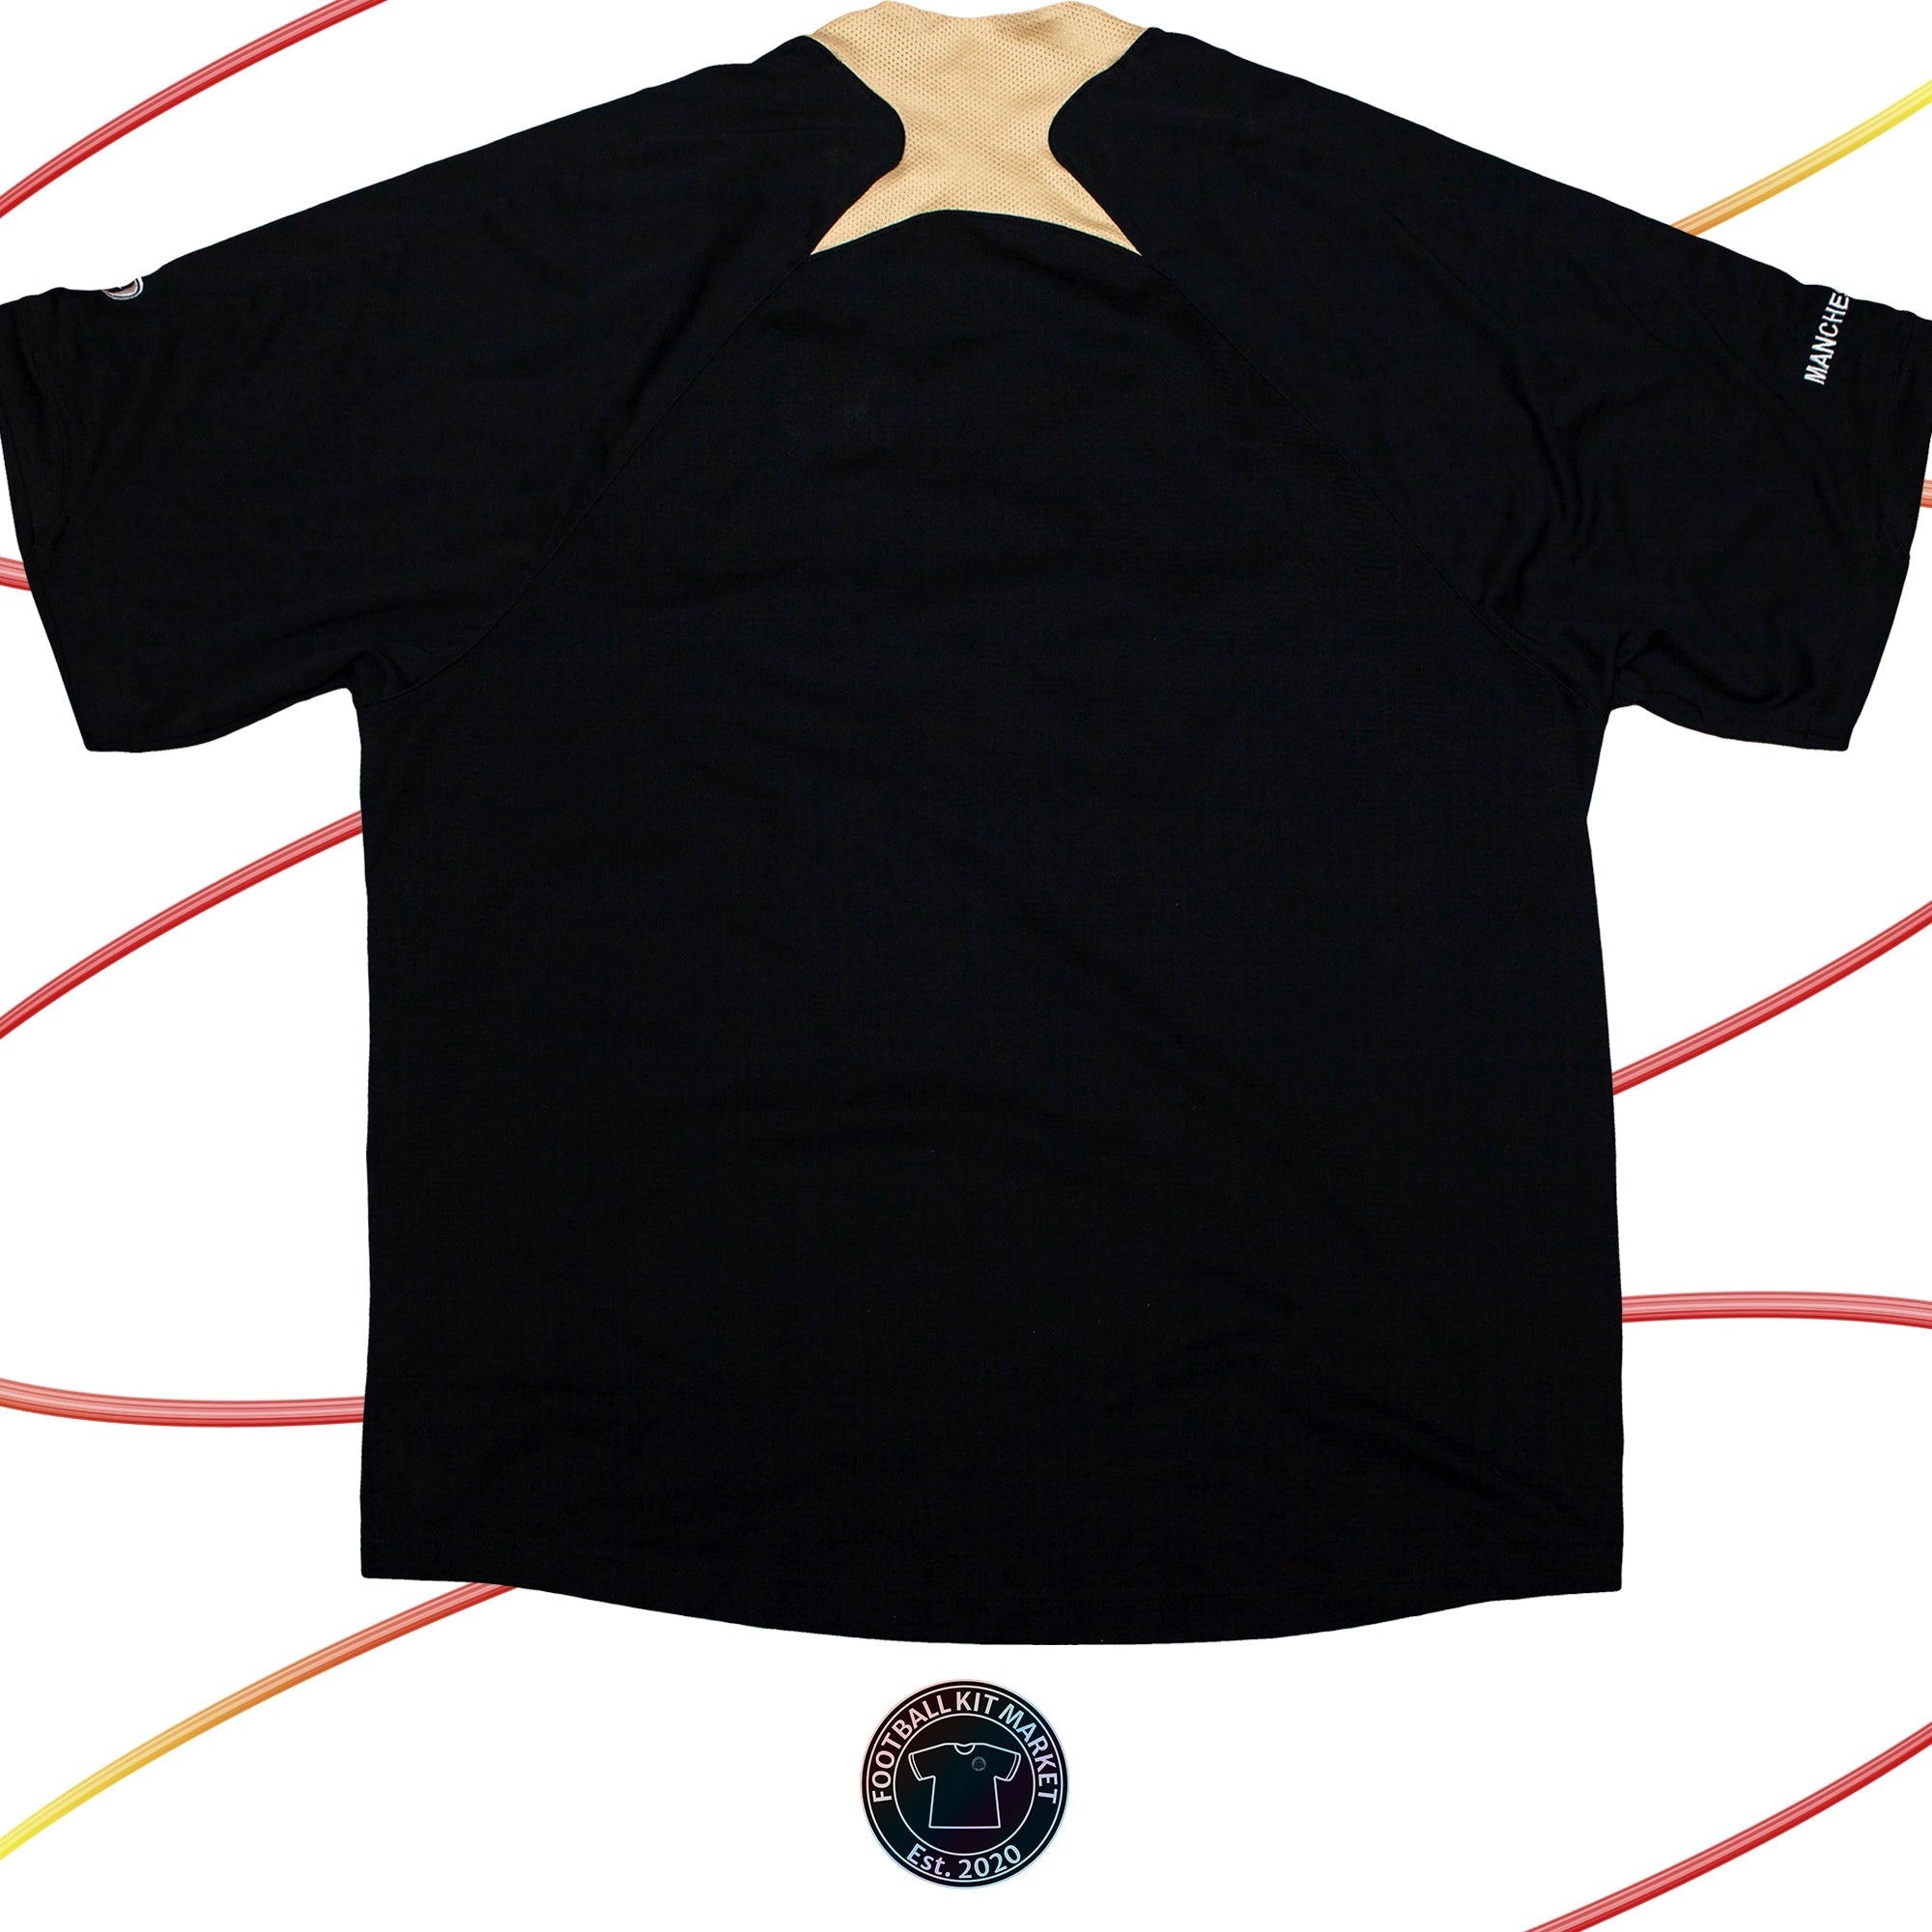 Genuine MANCHESTER UNITED Training Shirt (2007-2008) - NIKE (XL) - Product Image from Football Kit Market